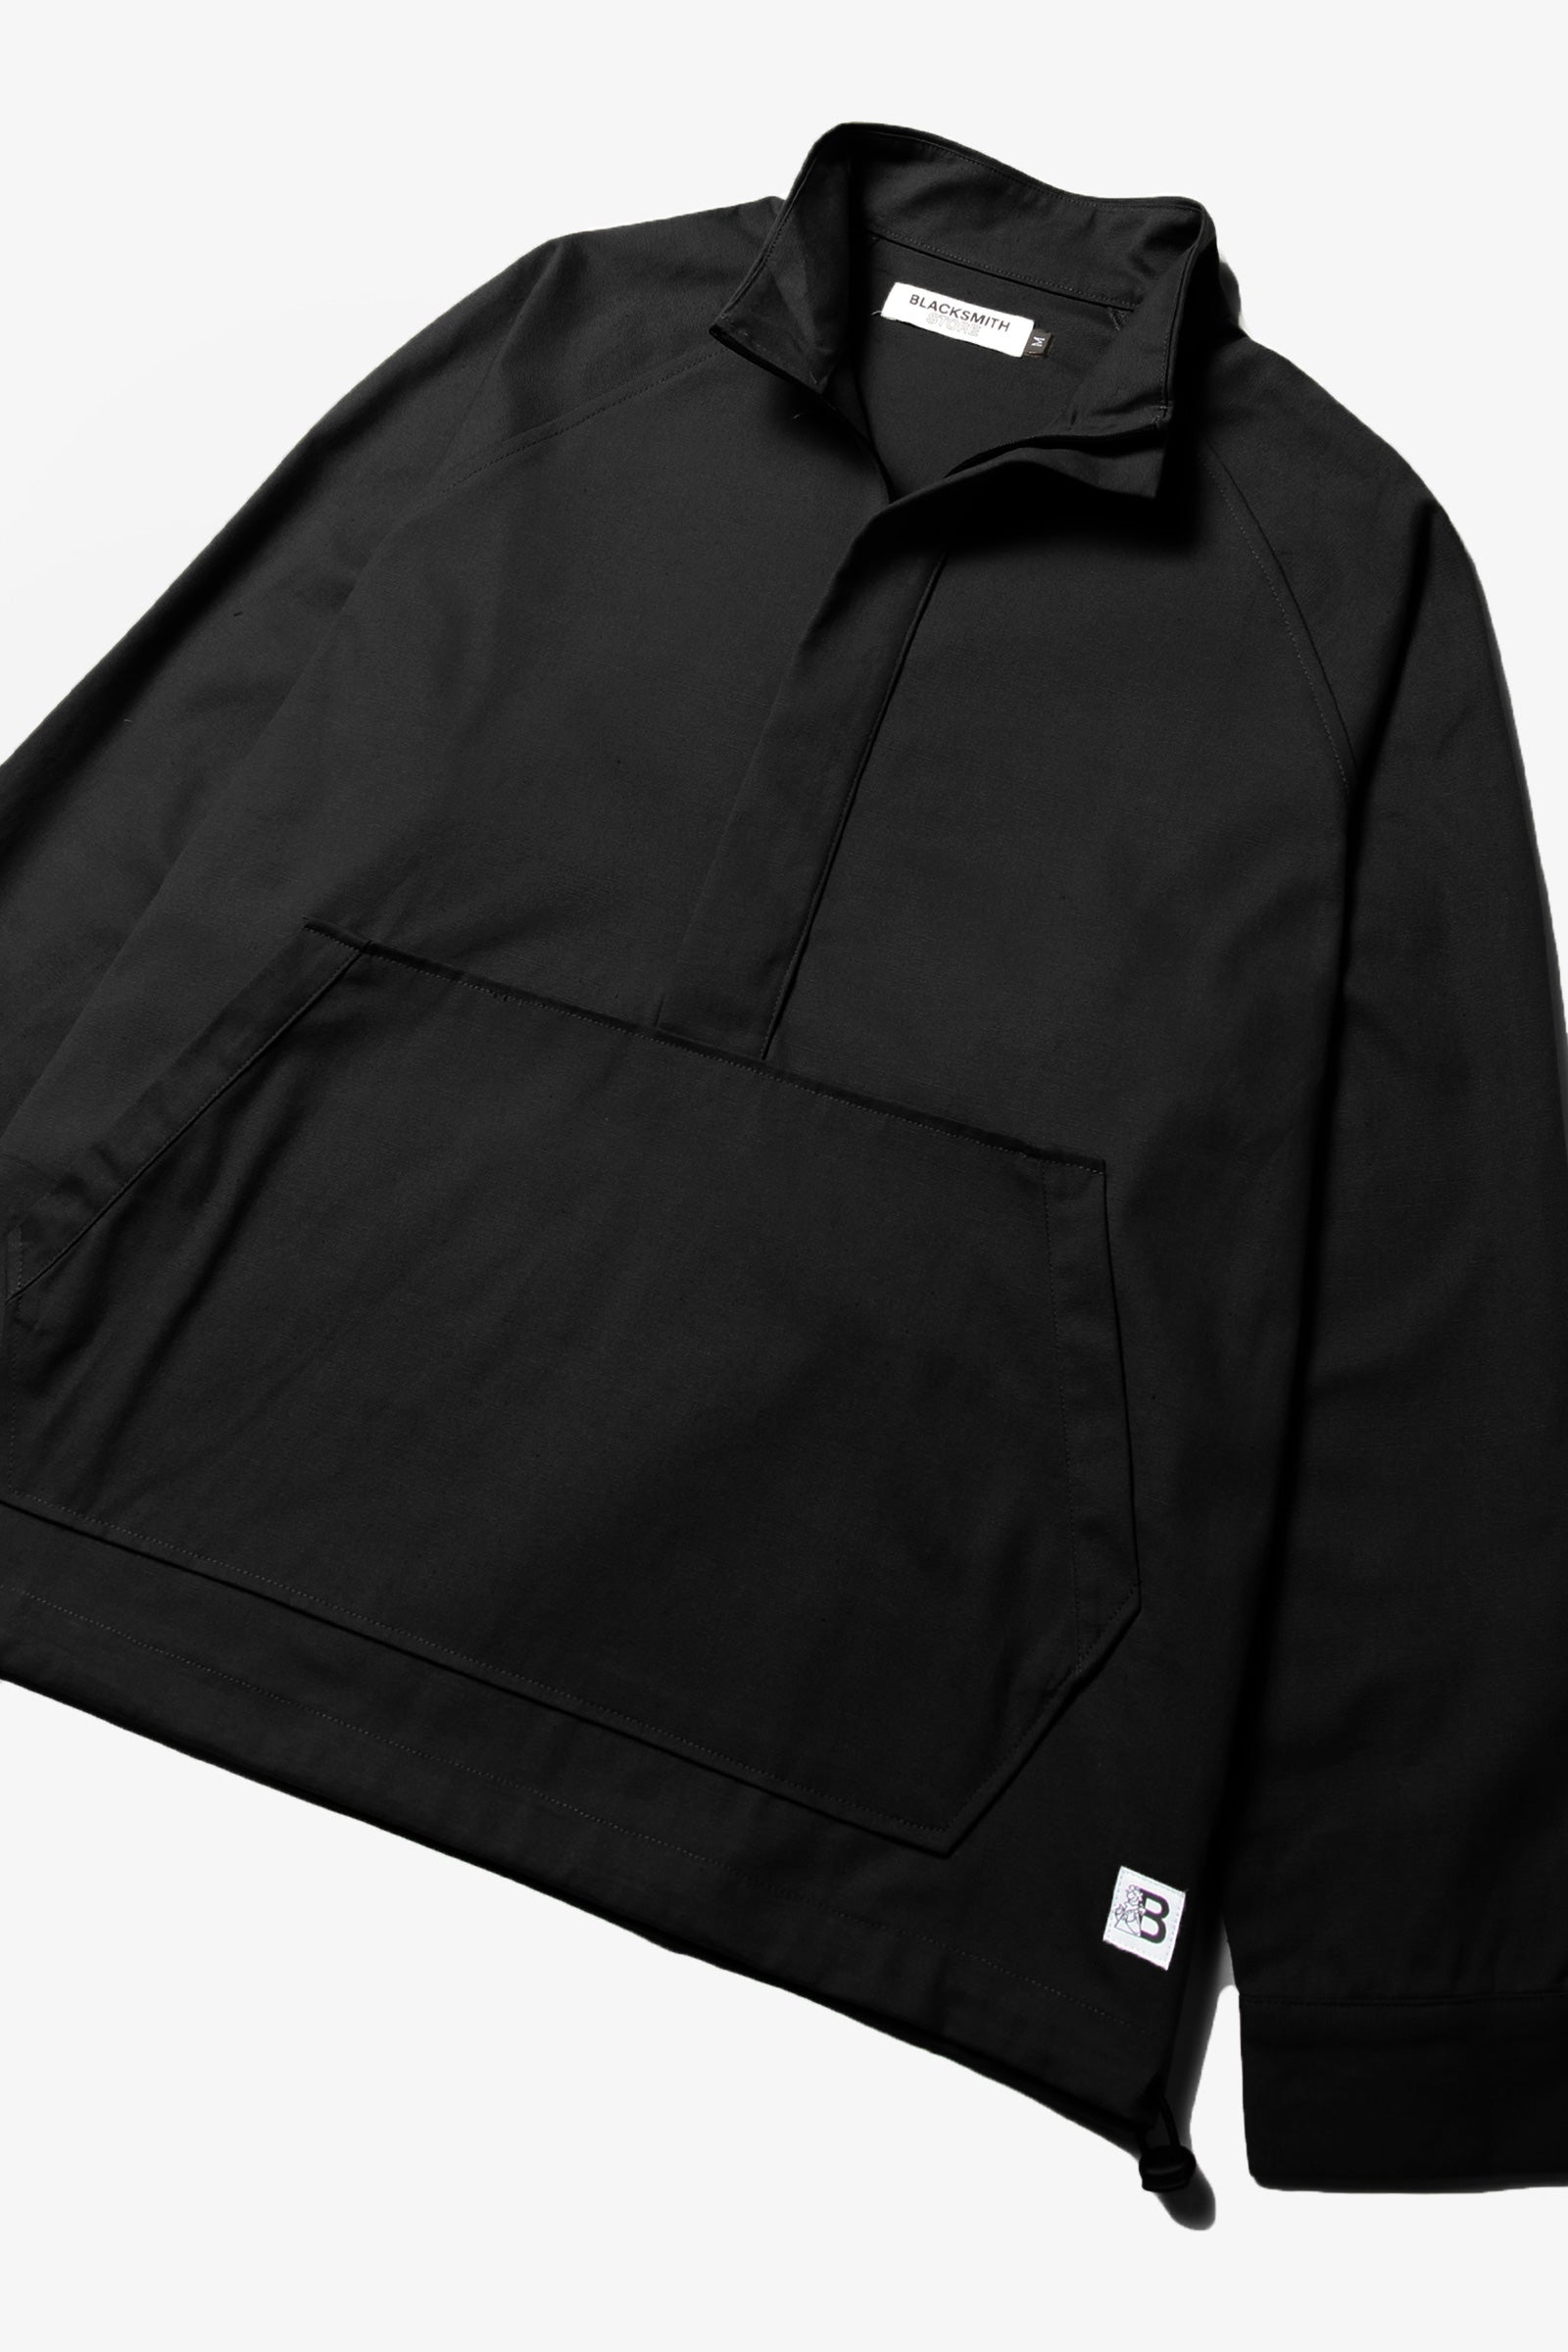 Blacksmith - Popover Wind Shirt - Black